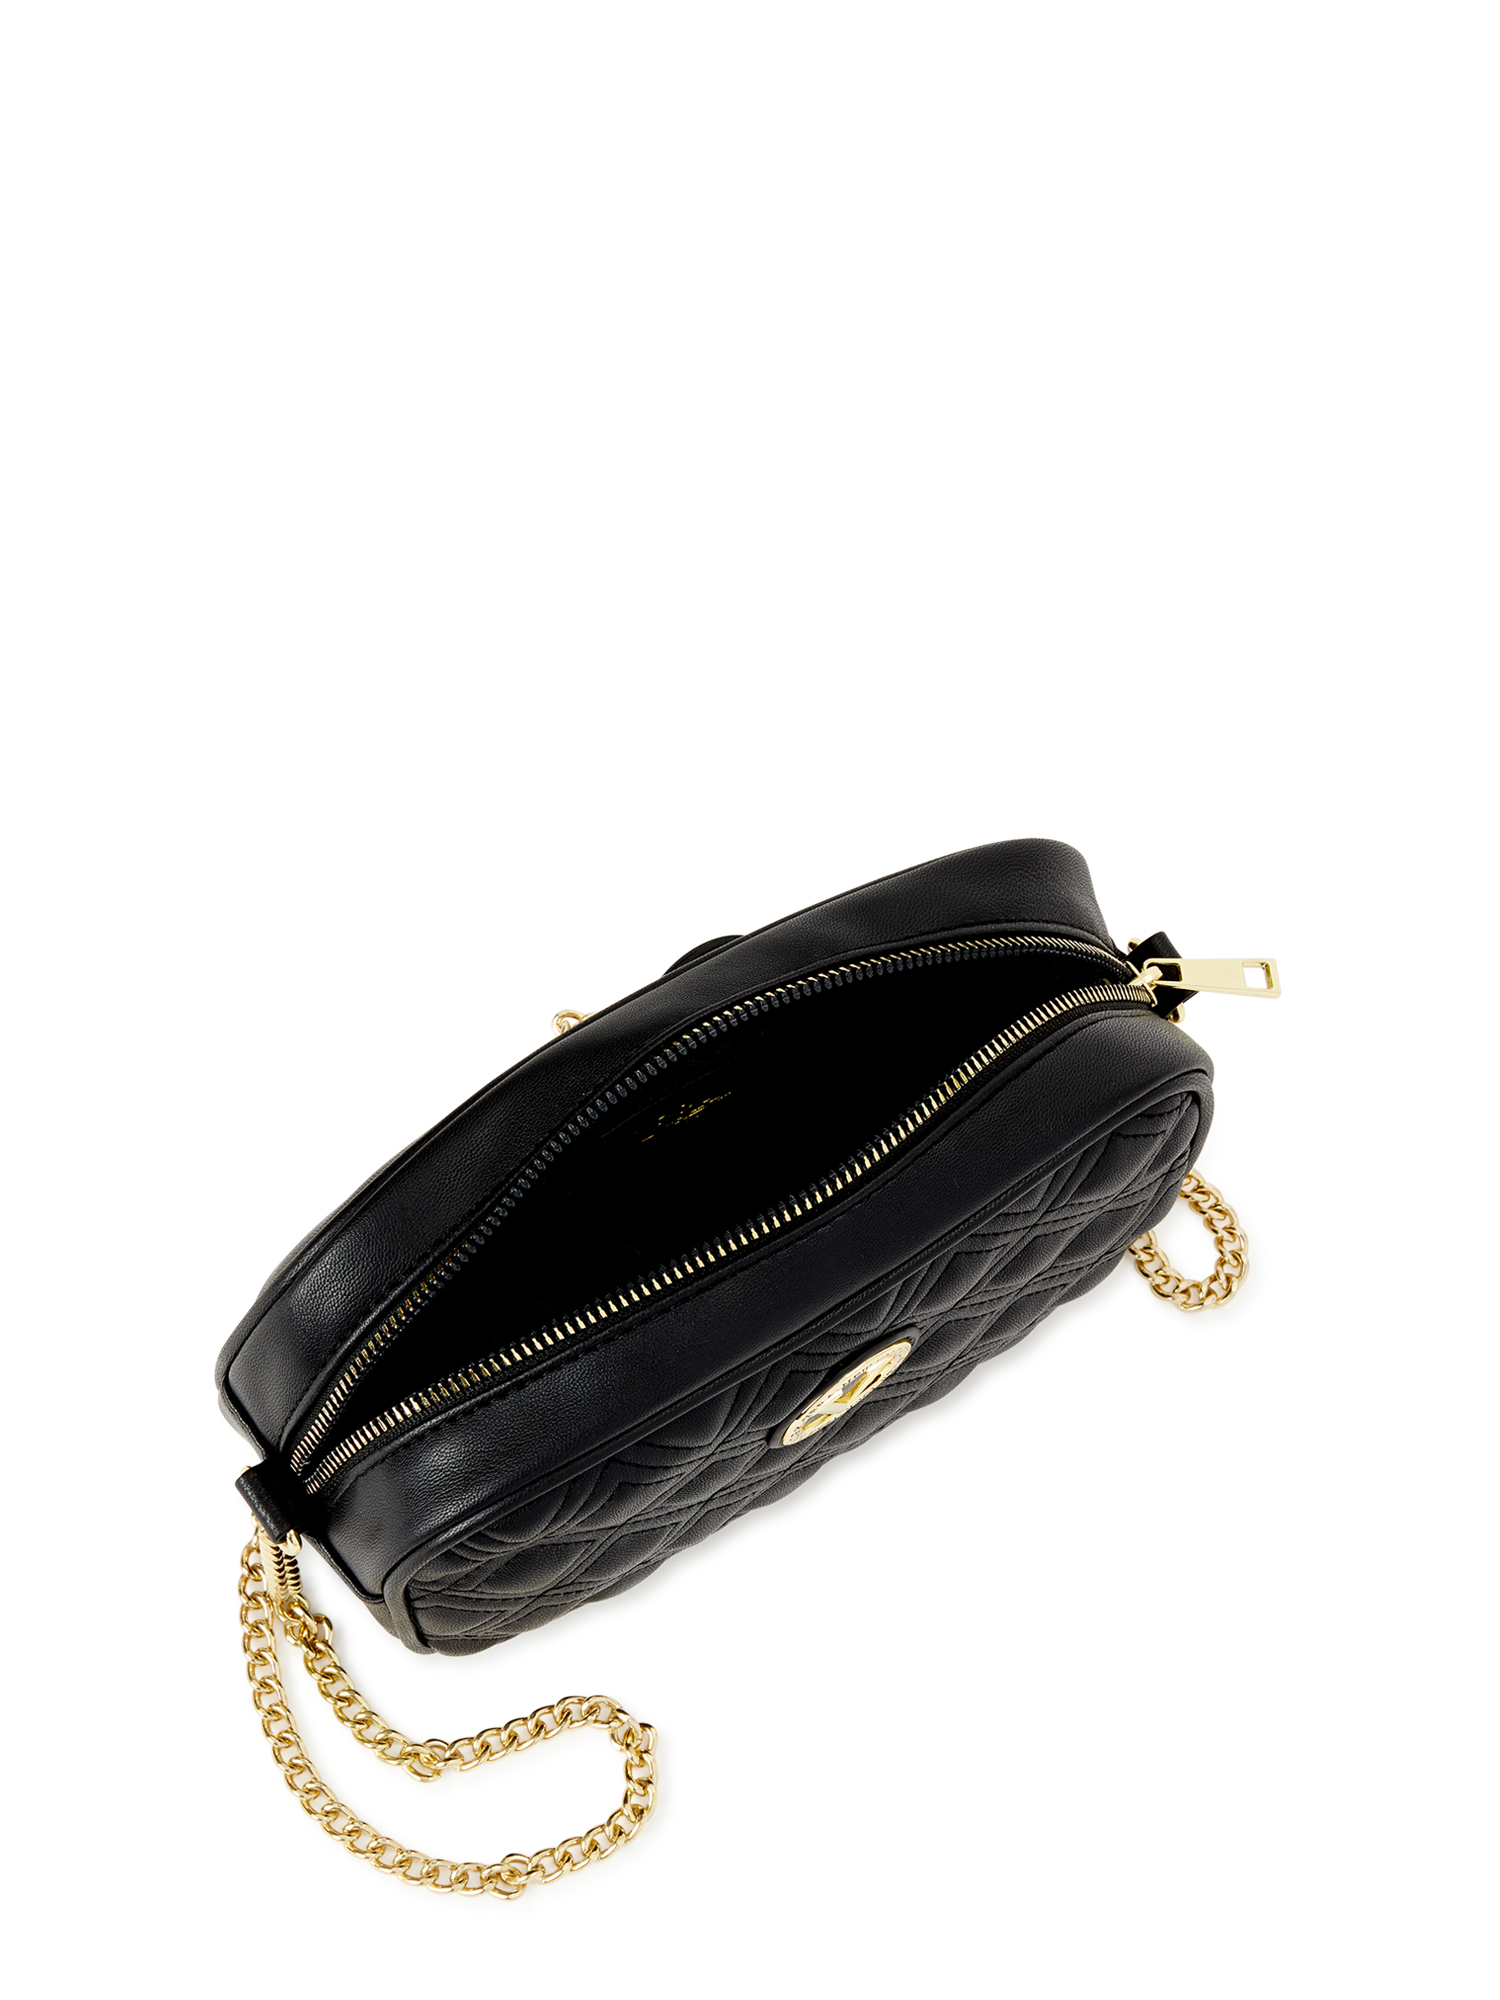 Vera New York Women's Marina Quilted Crossbody Handbag with Chain Straps Black - image 5 of 5